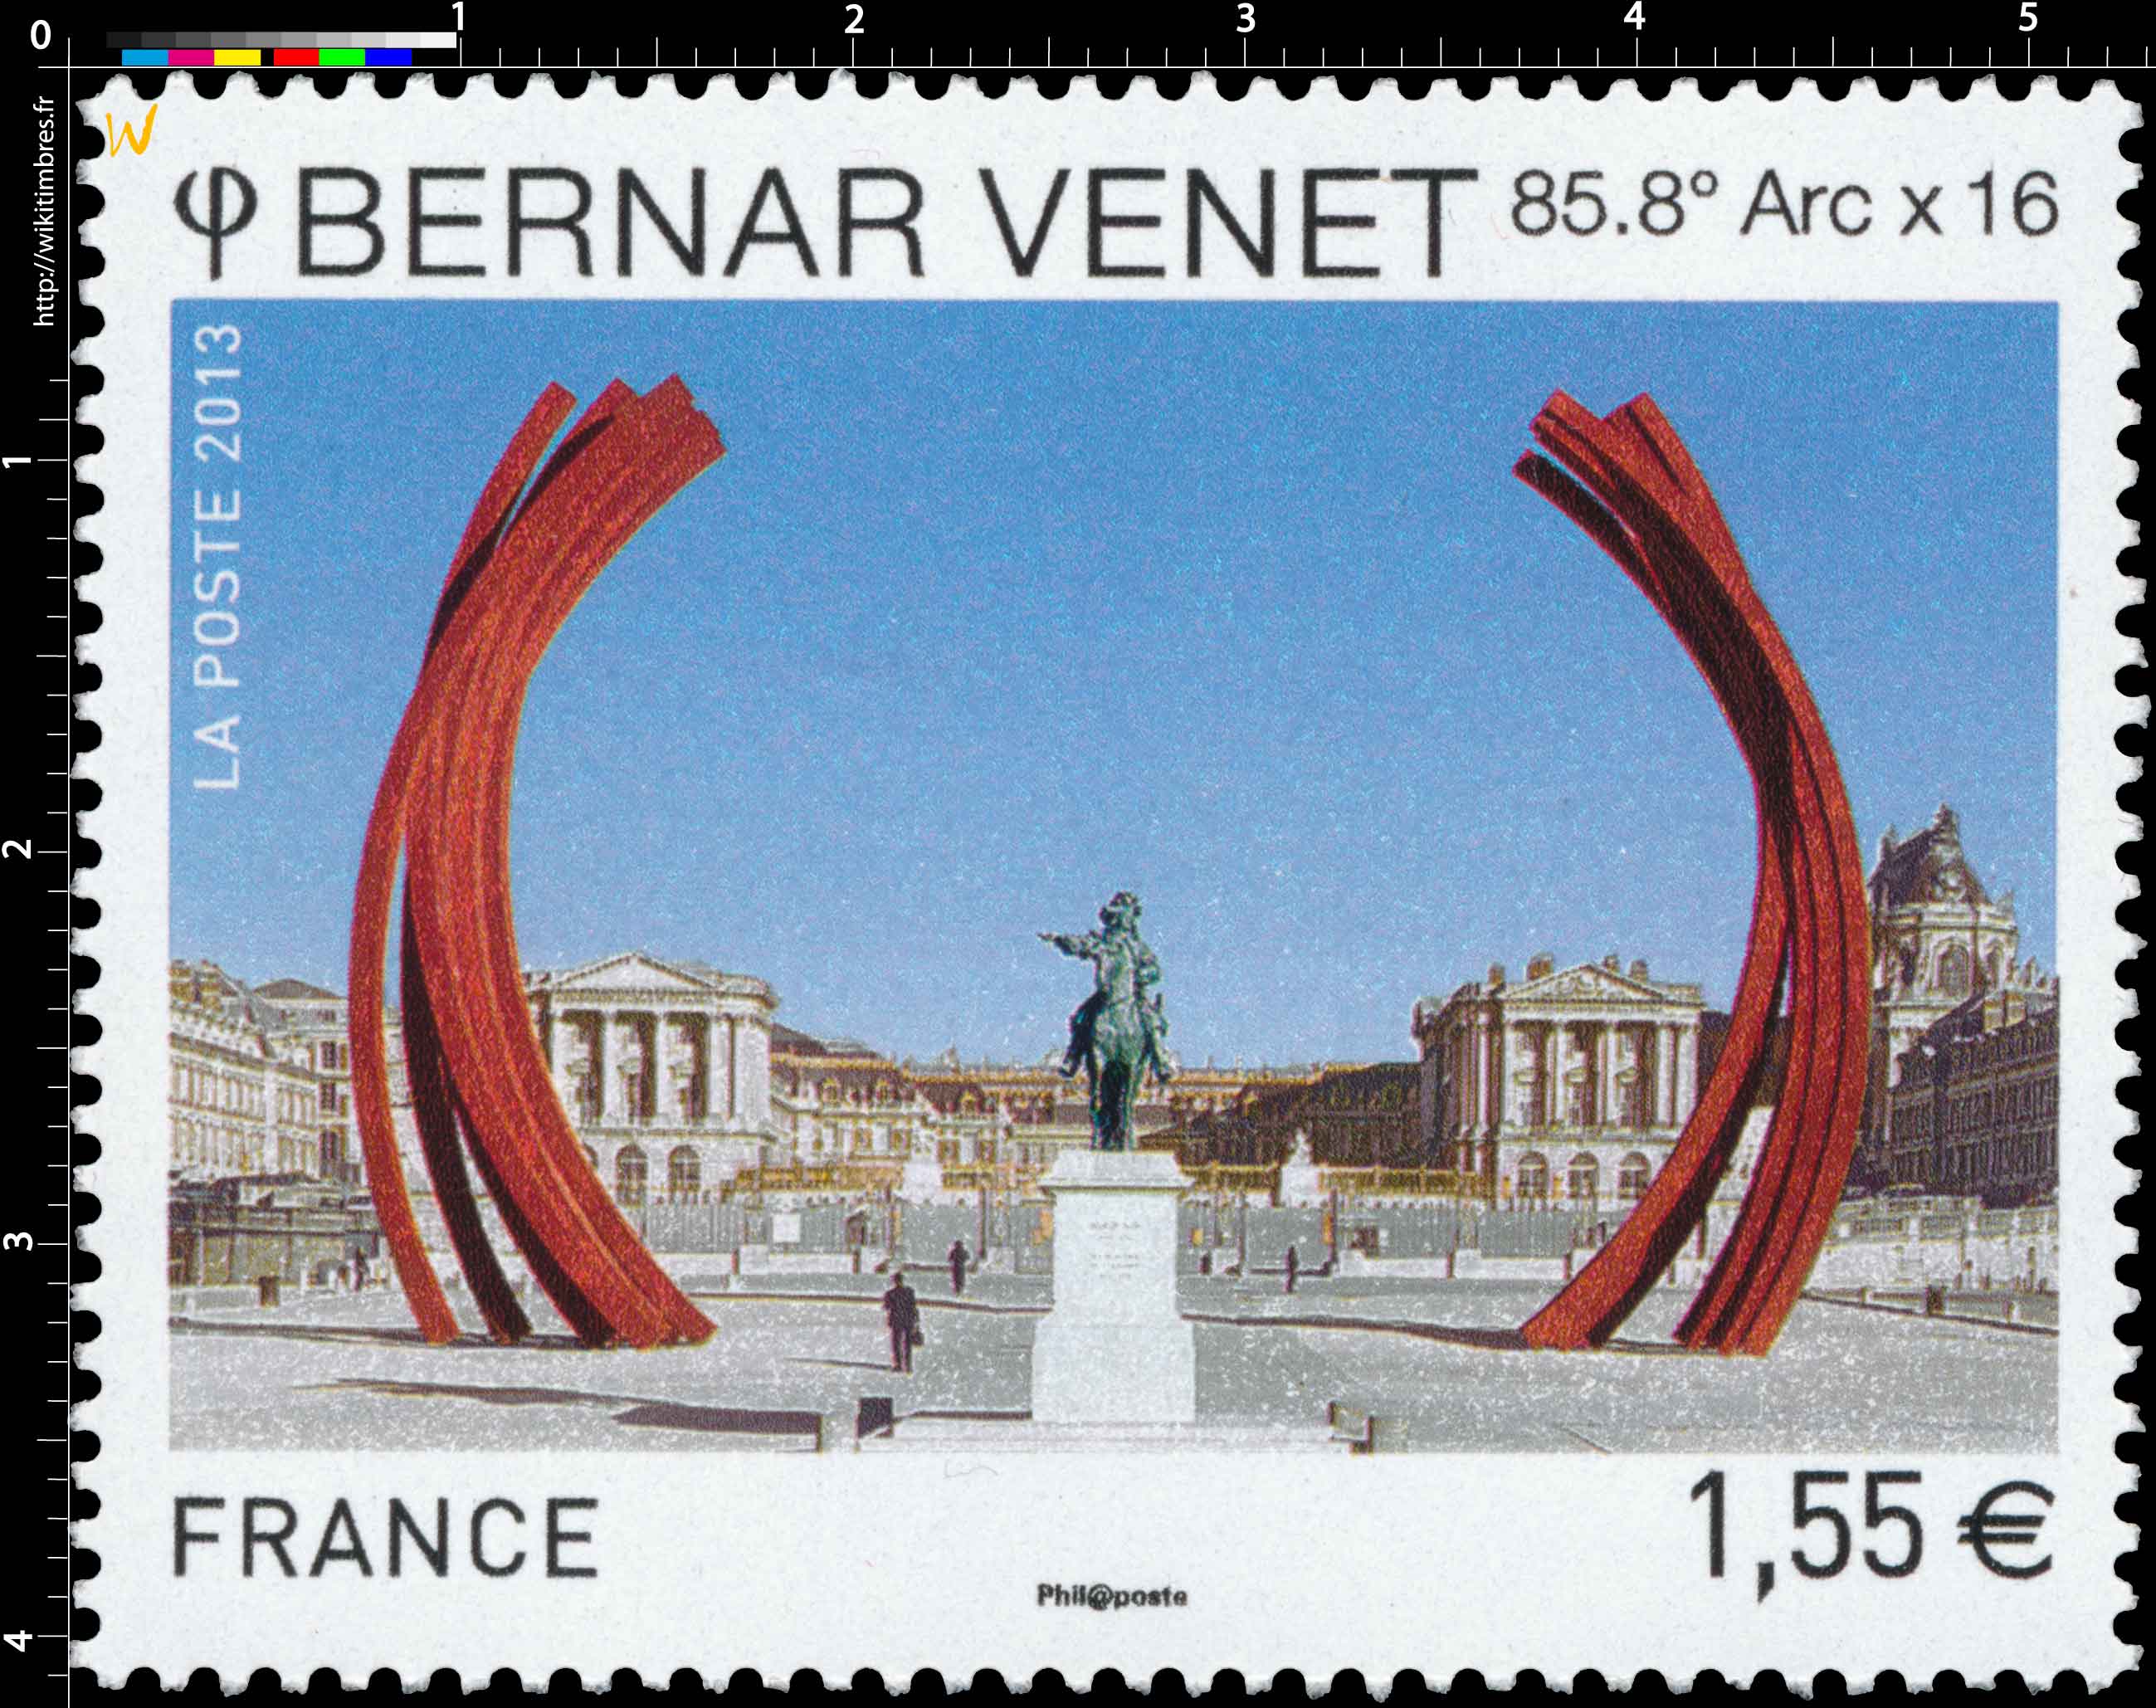 2013 Bernar Venet 85,8° Arc x 16